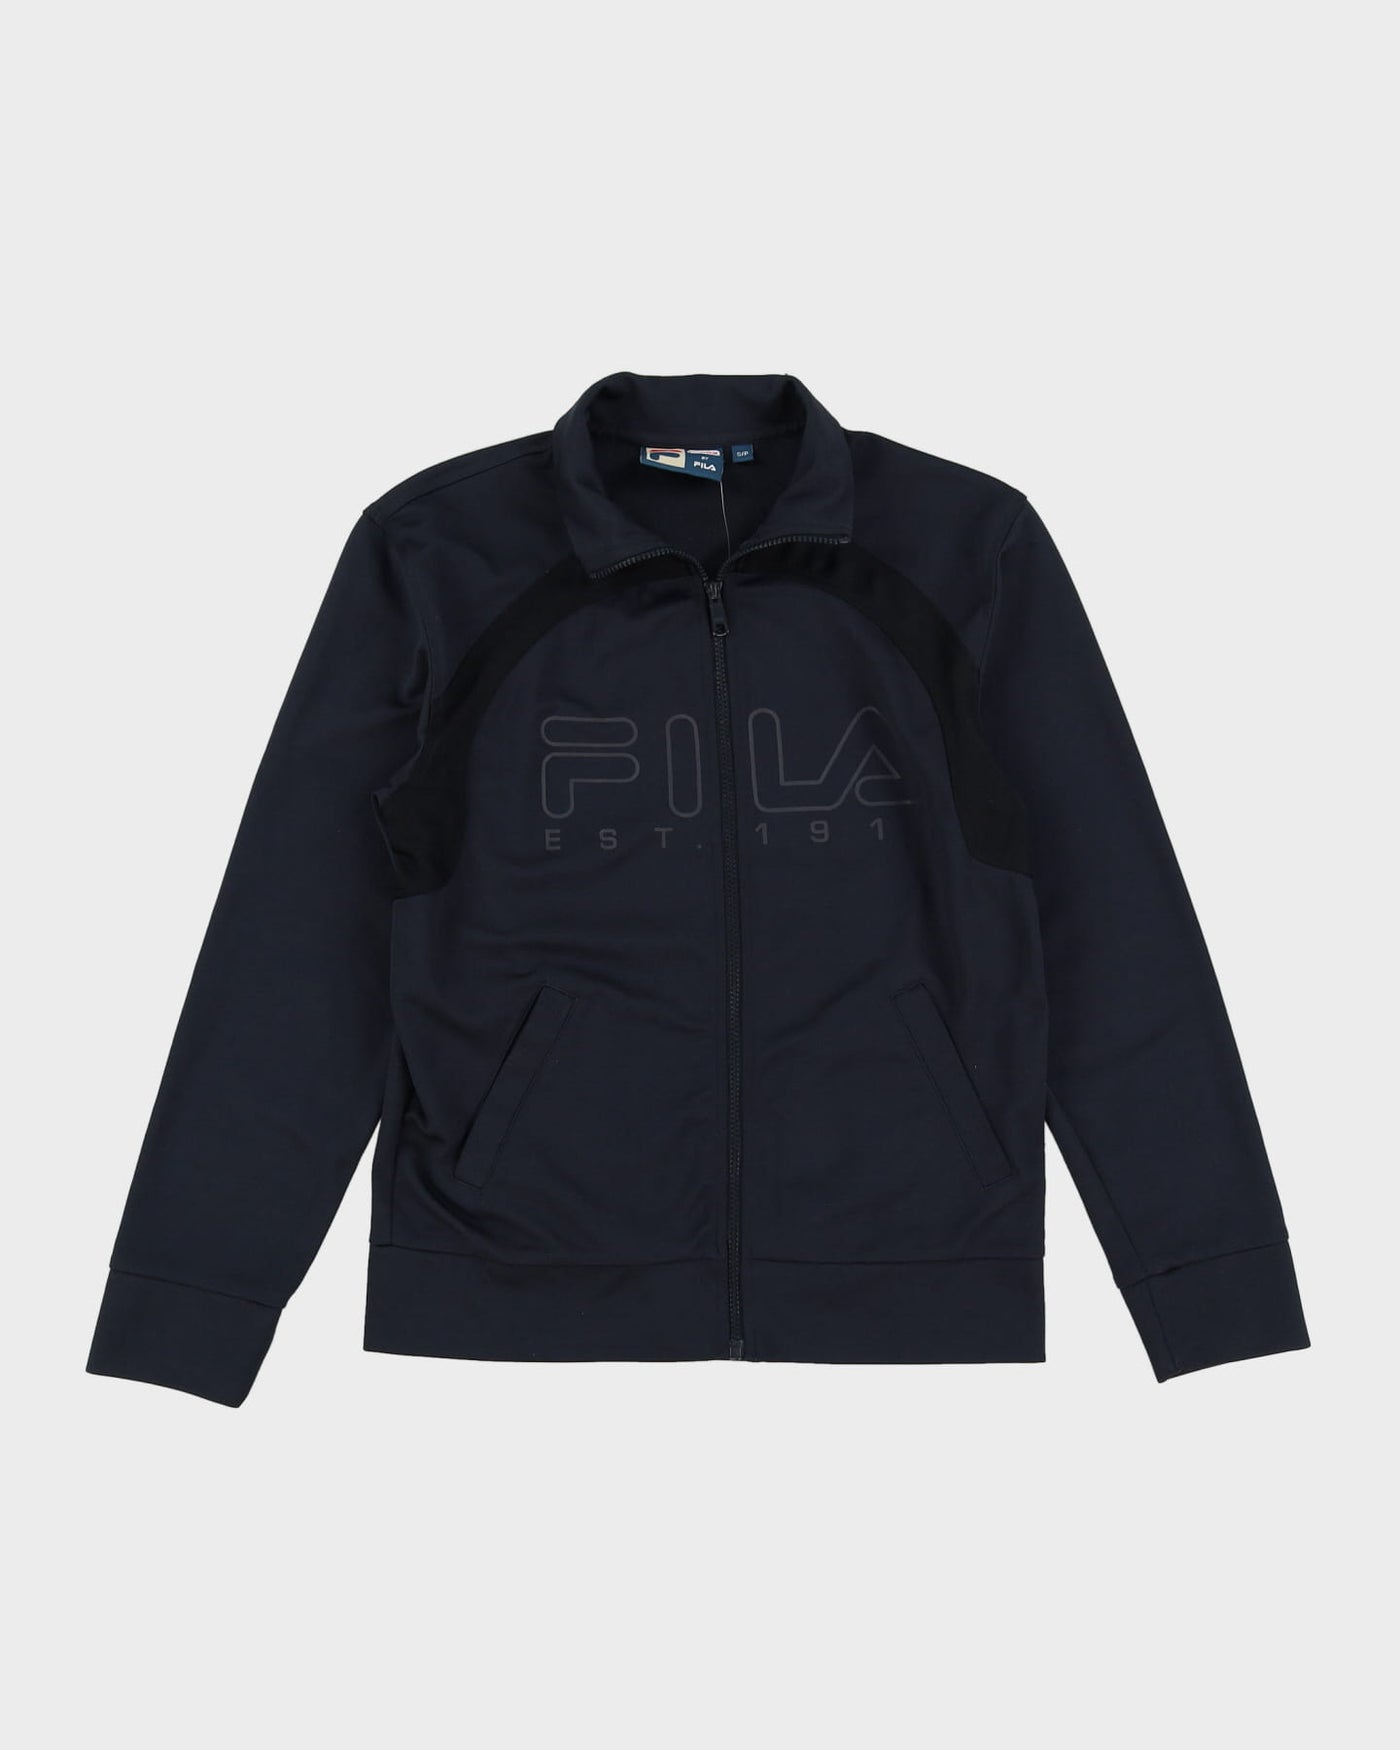 FILA Blue / Black Track Jacket - S